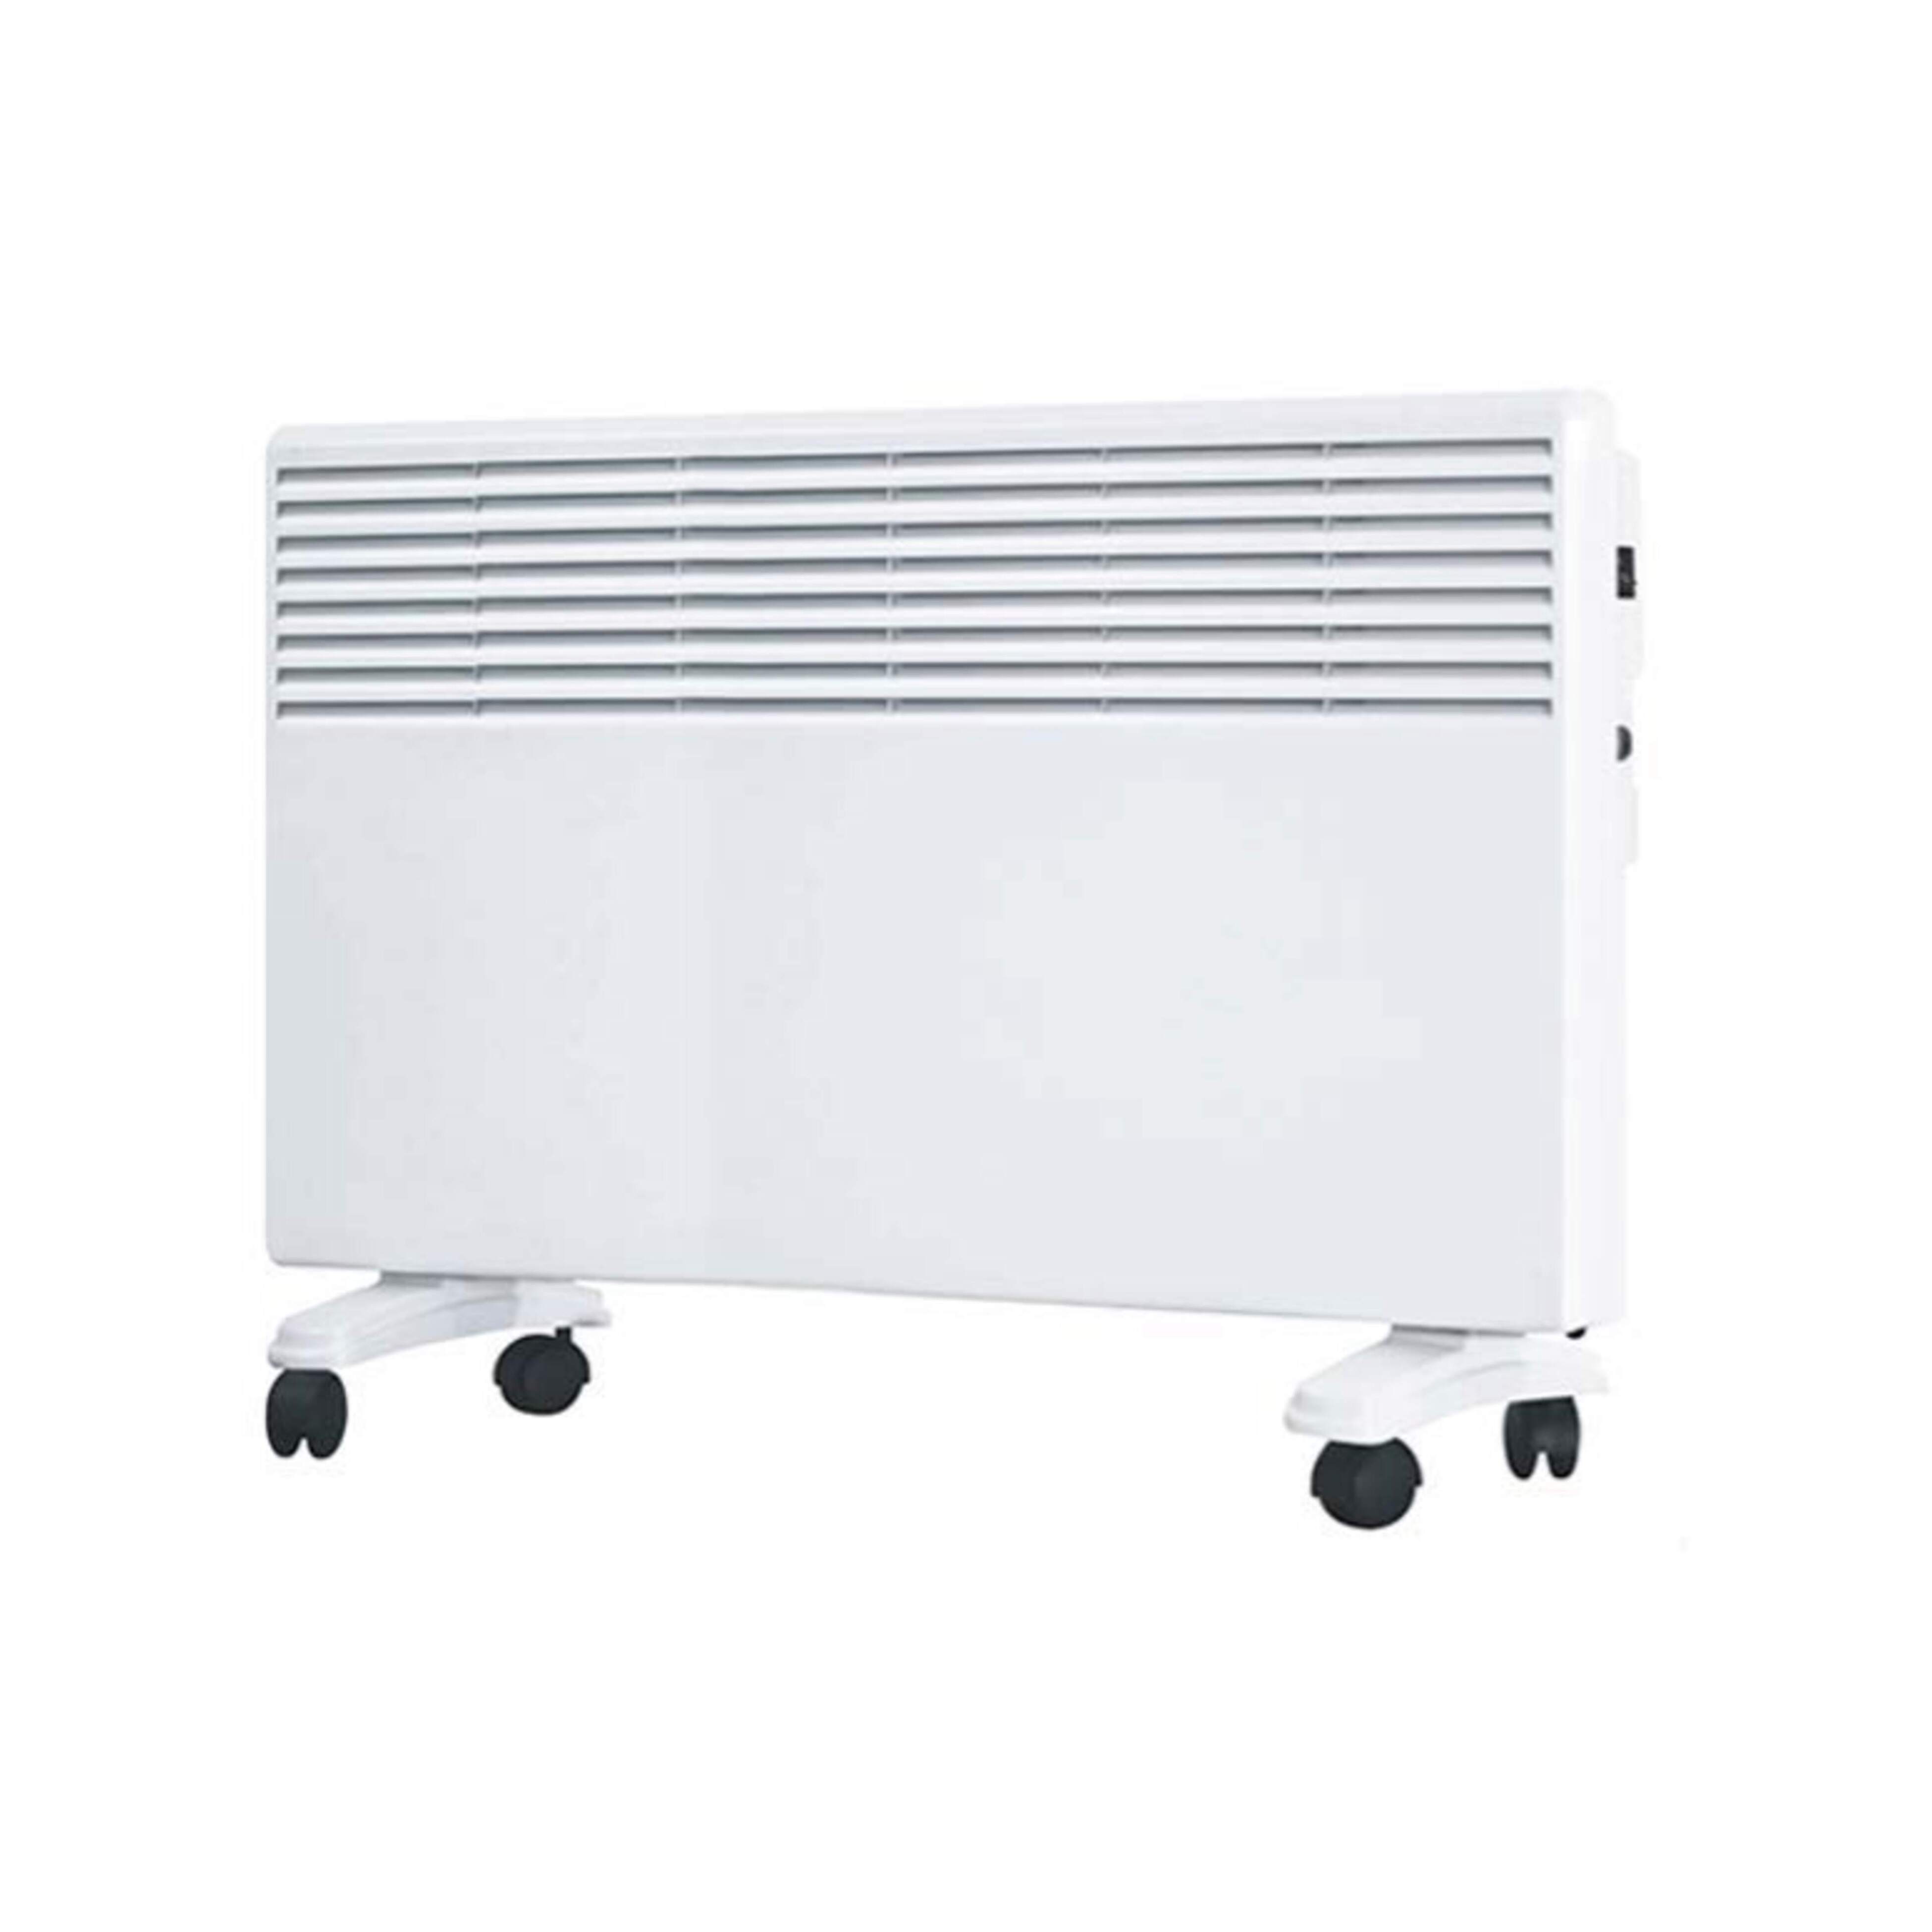 White panel heater.